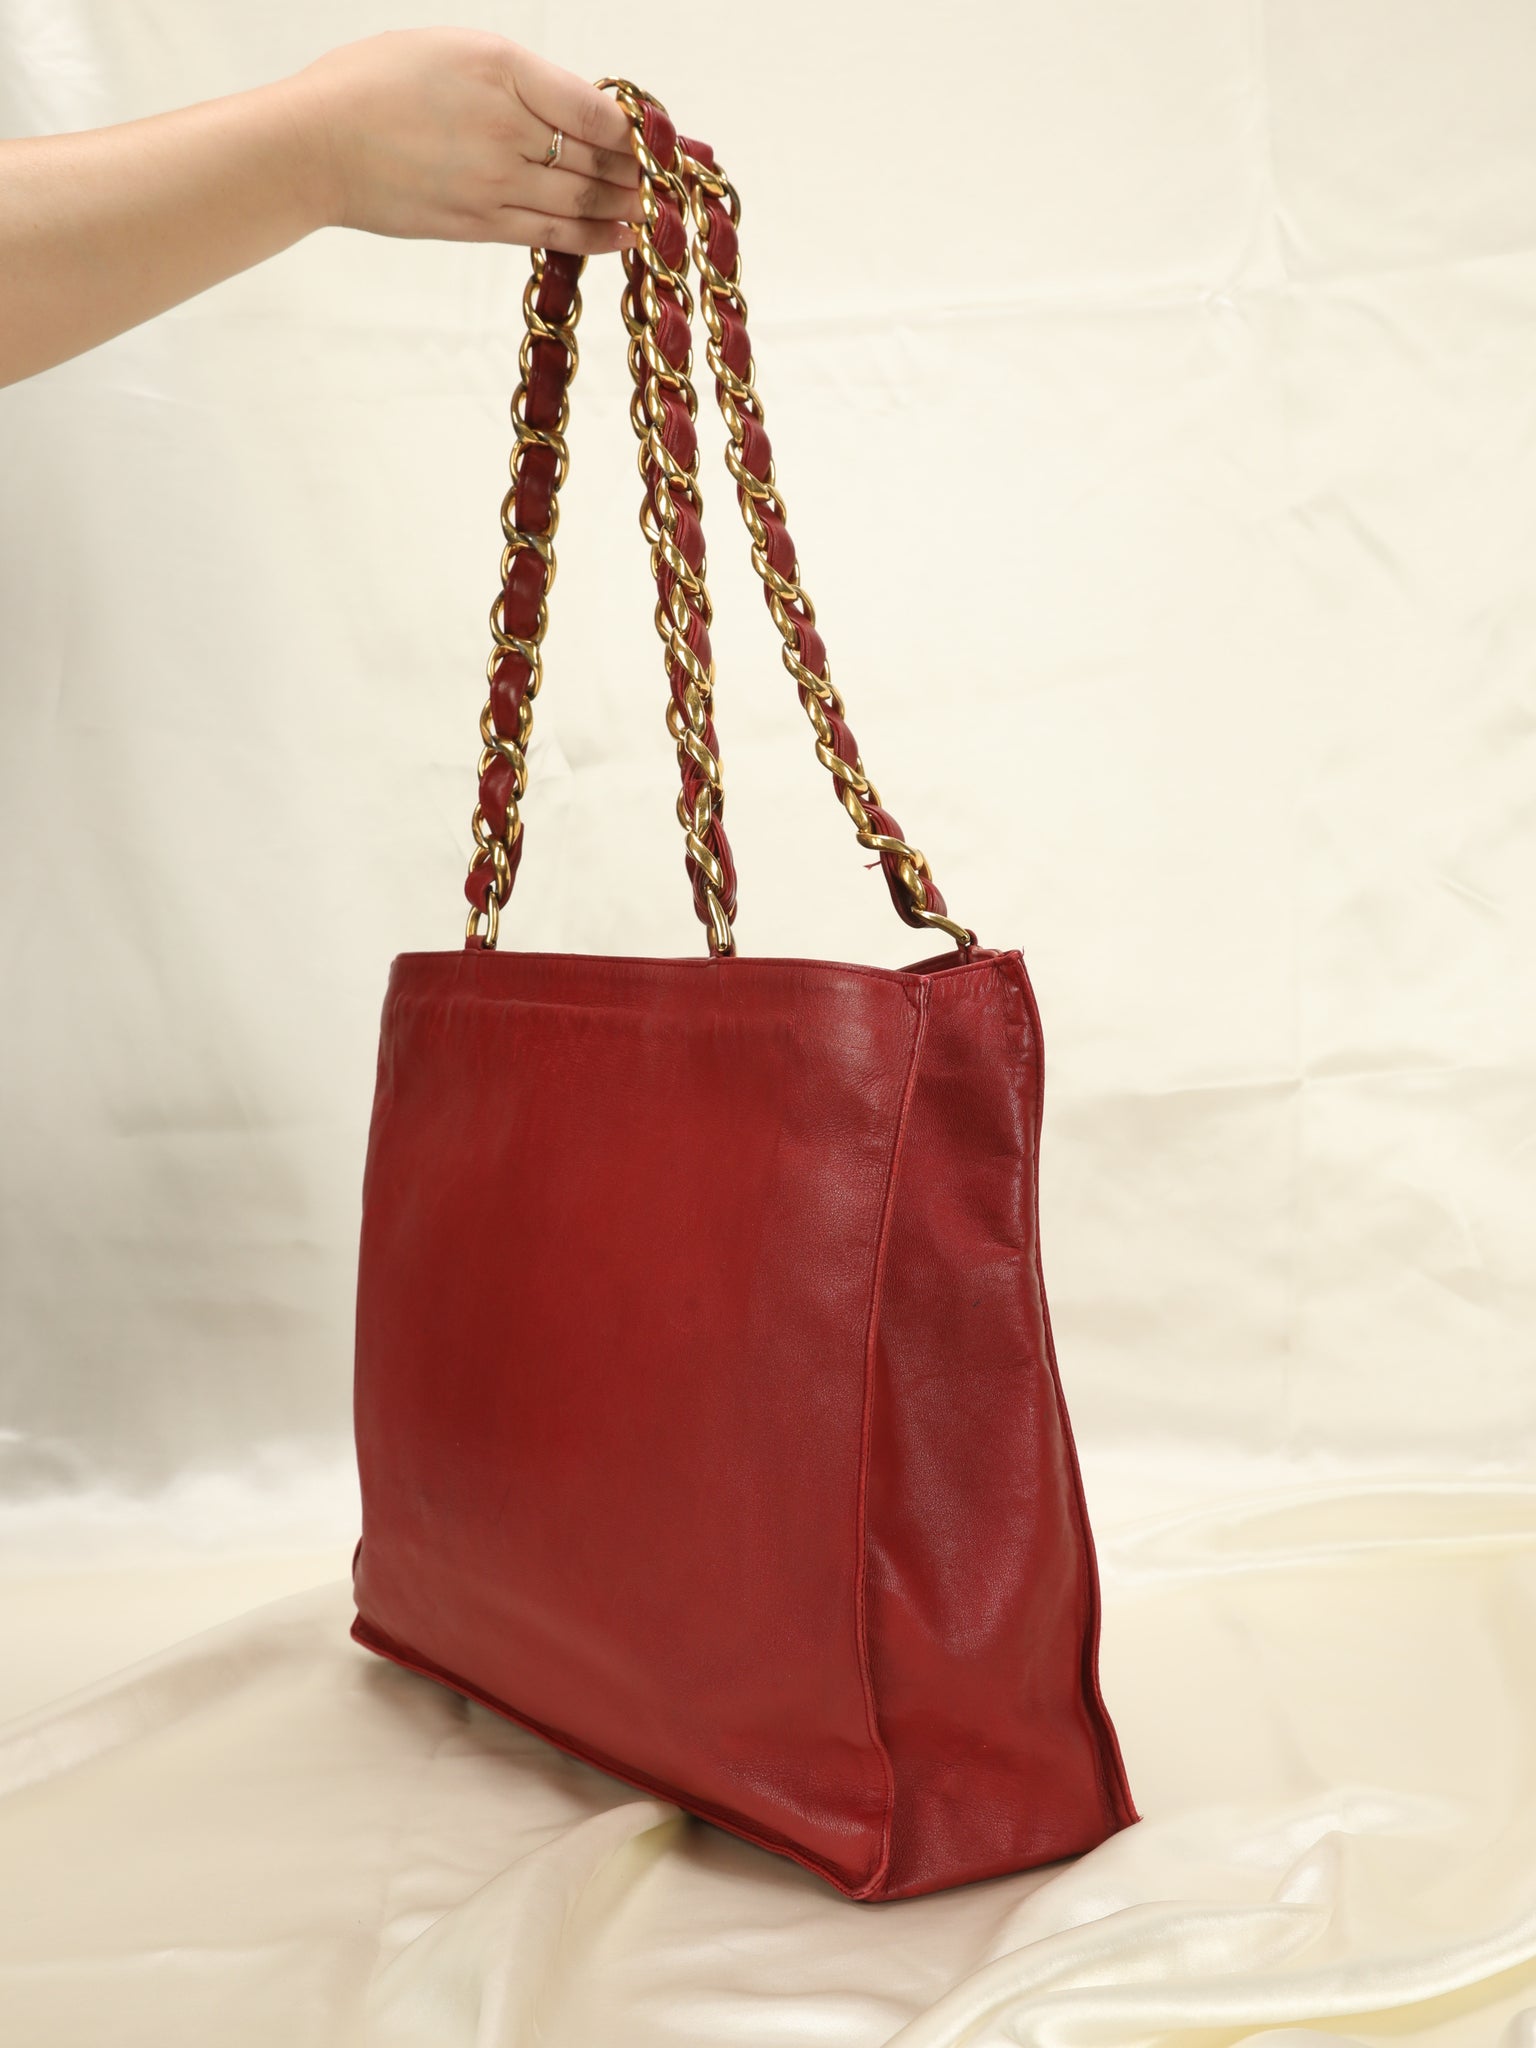 Chanel Lambskin Tote Bag